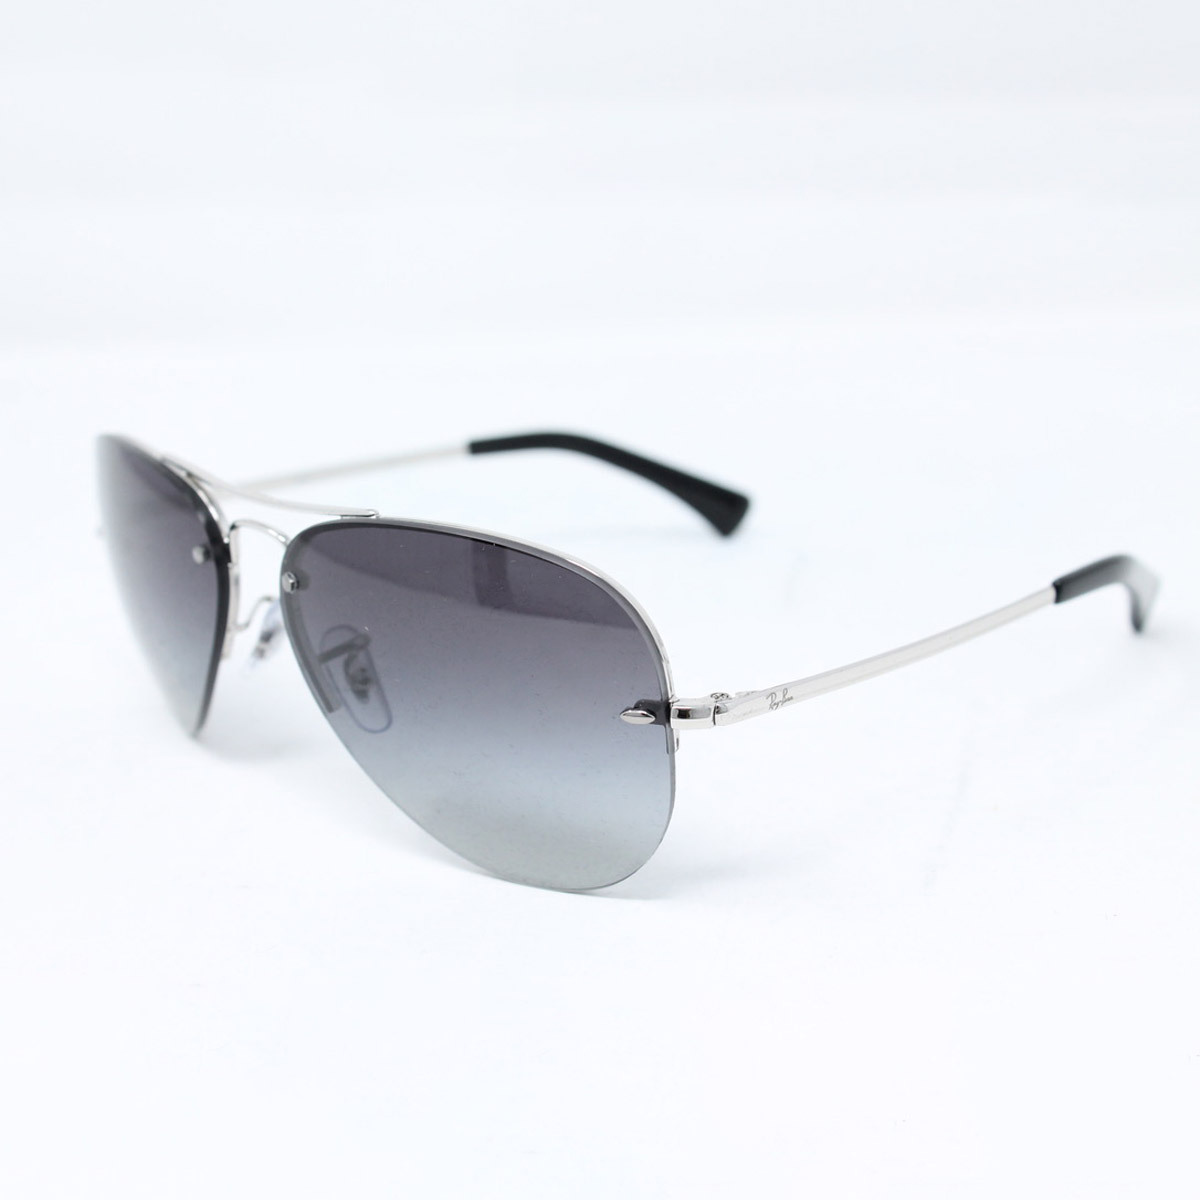 Ray Ban Chrome Metal Sunglasses with 